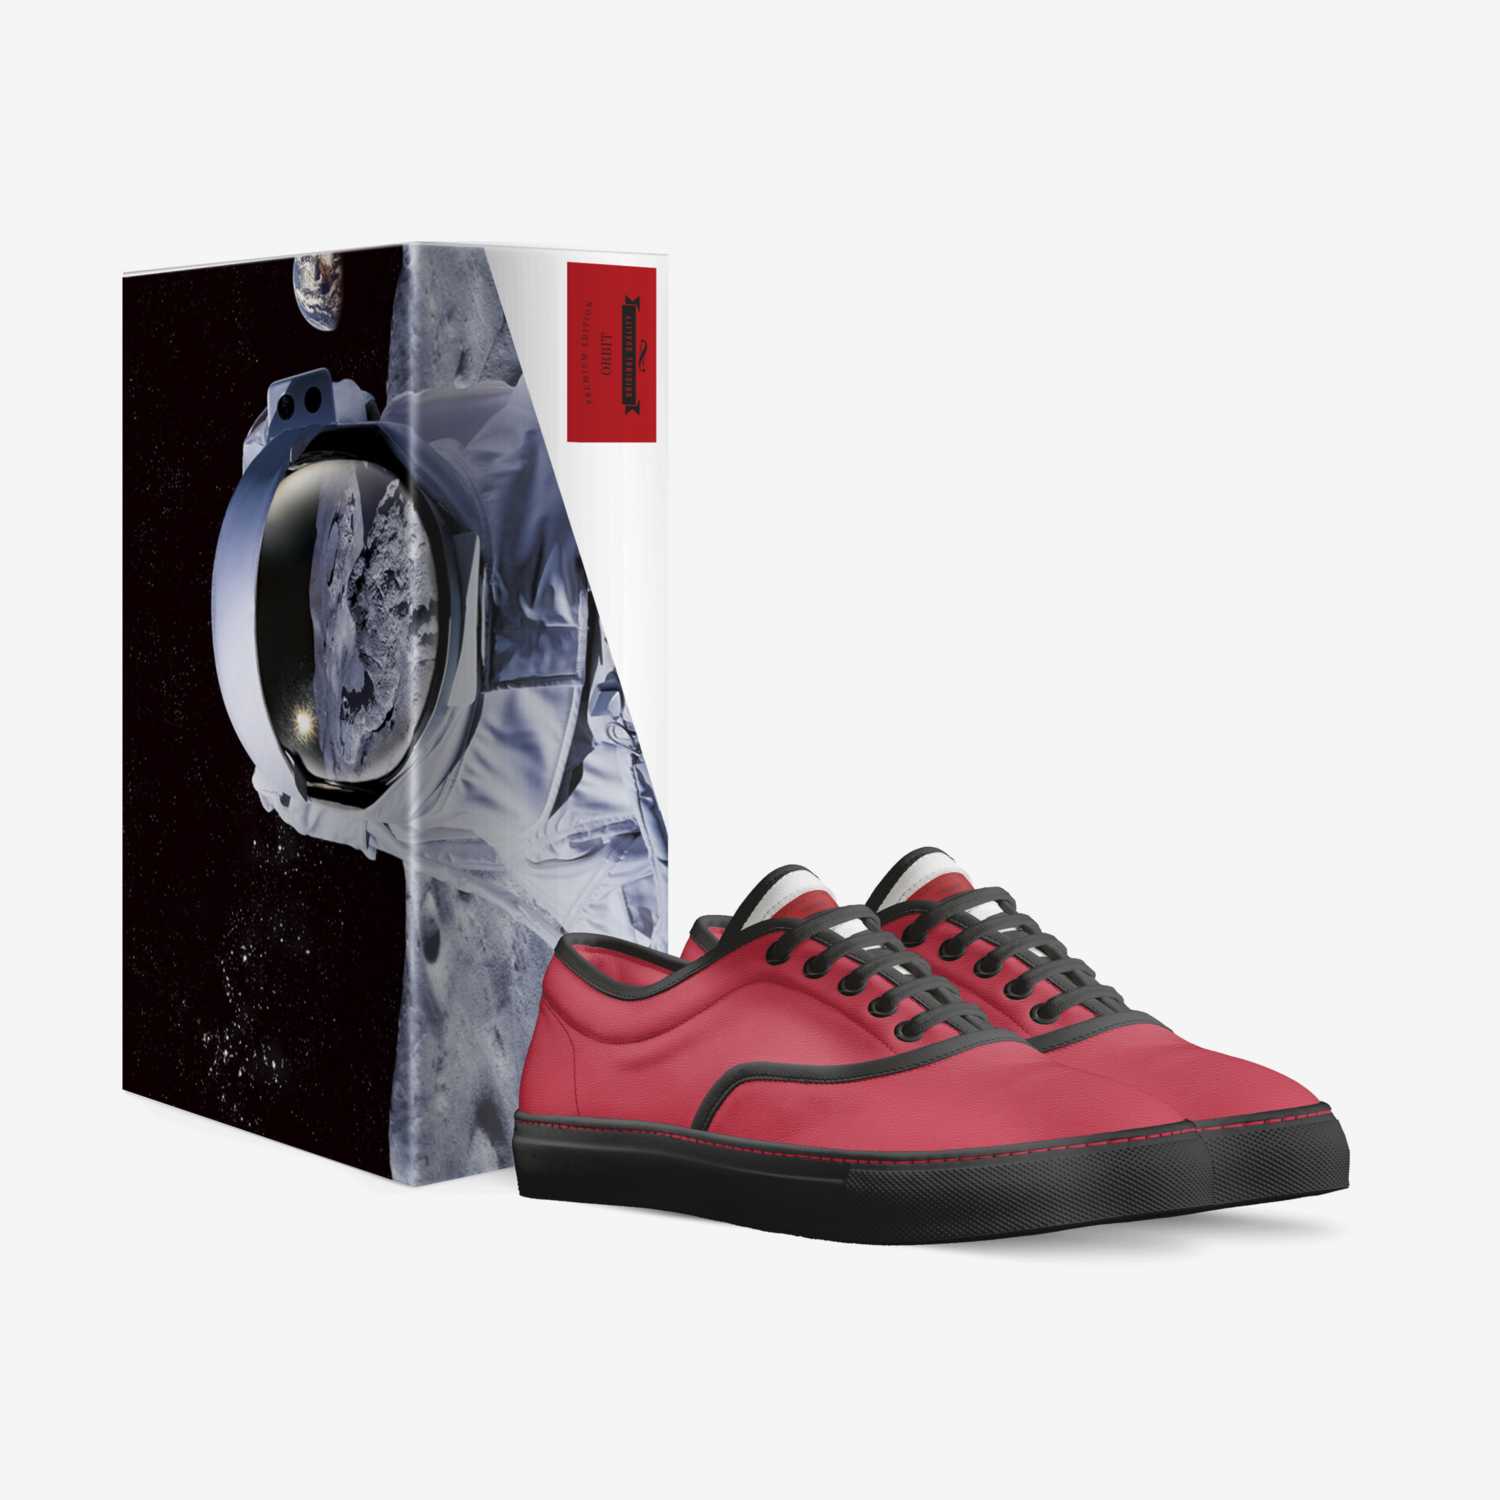 Orbit custom made in Italy shoes by Ryan Cruz | Box view